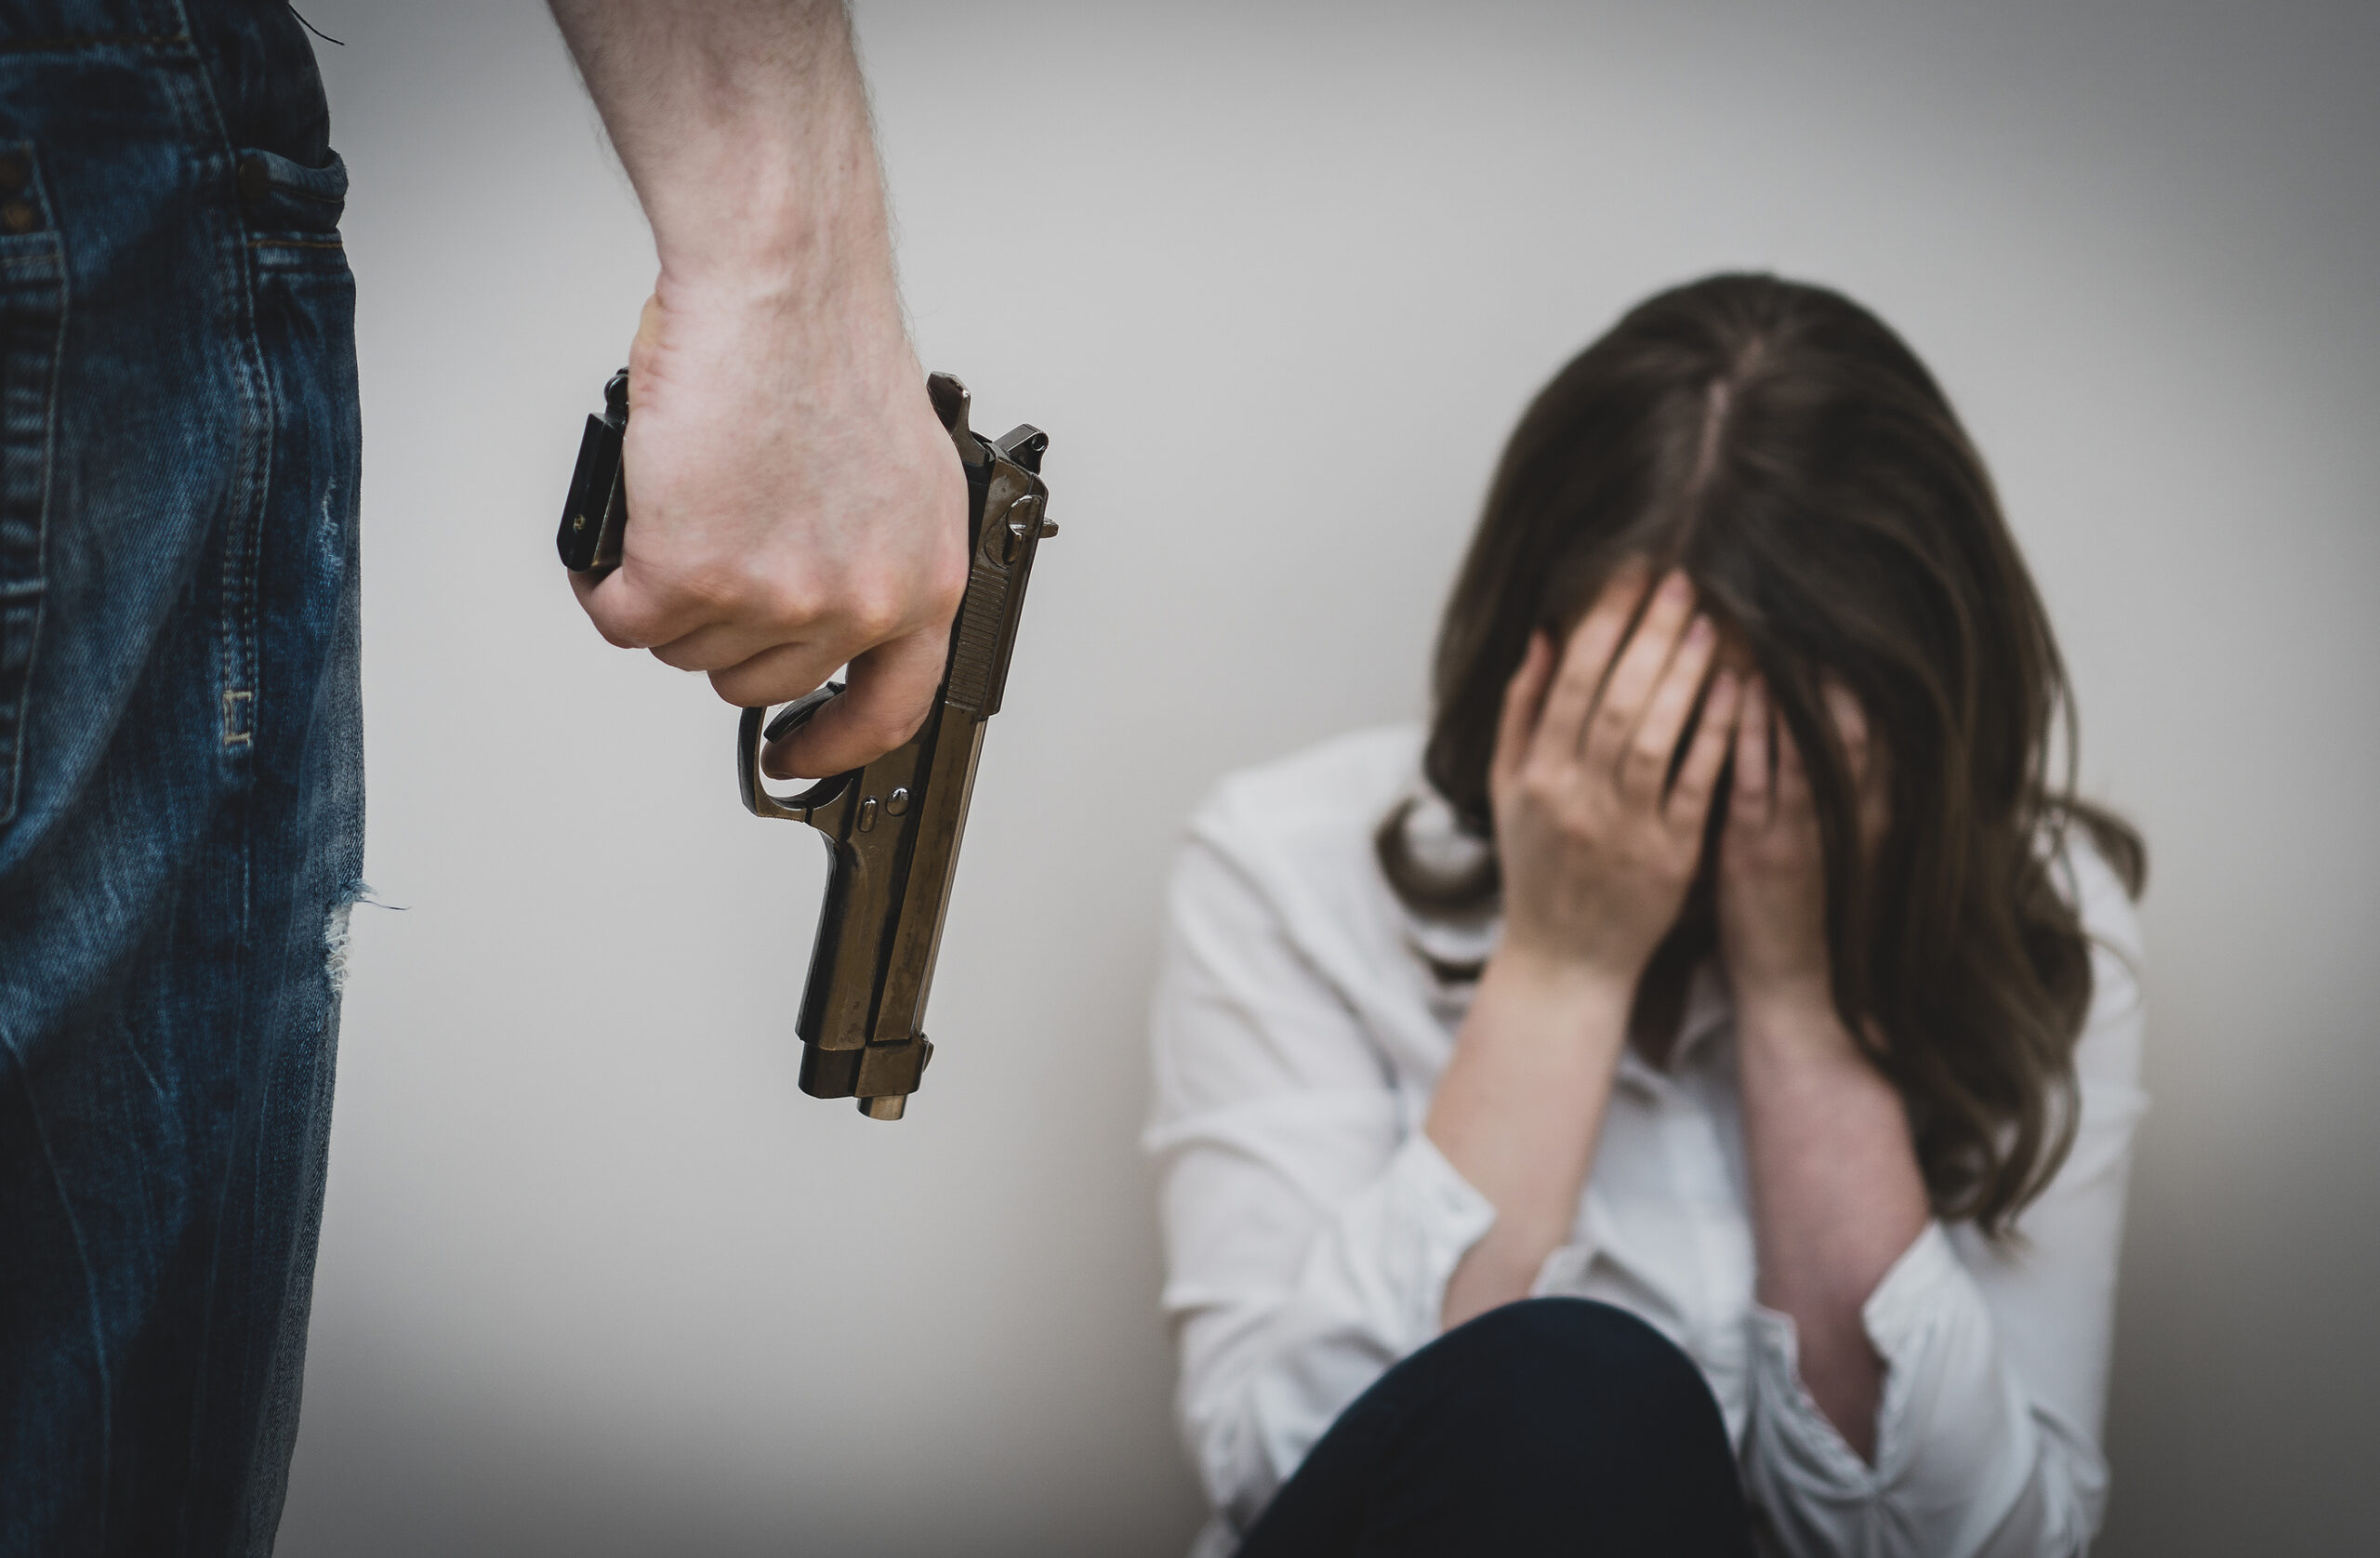 Home violence concept. Man with gun threaten woman.